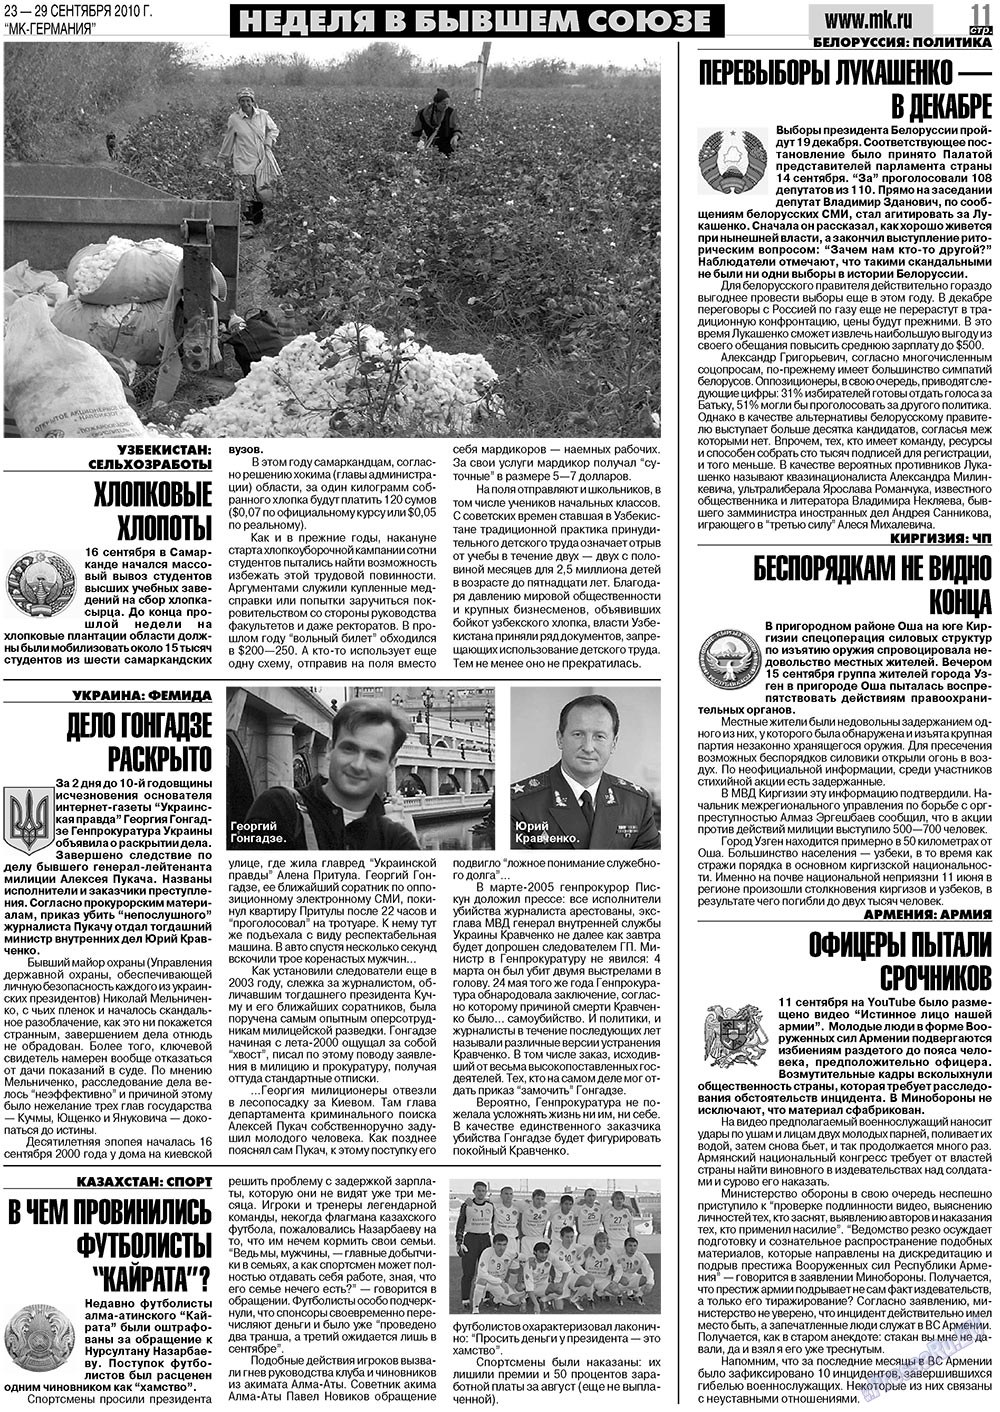 МК-Германия, газета. 2010 №39 стр.11